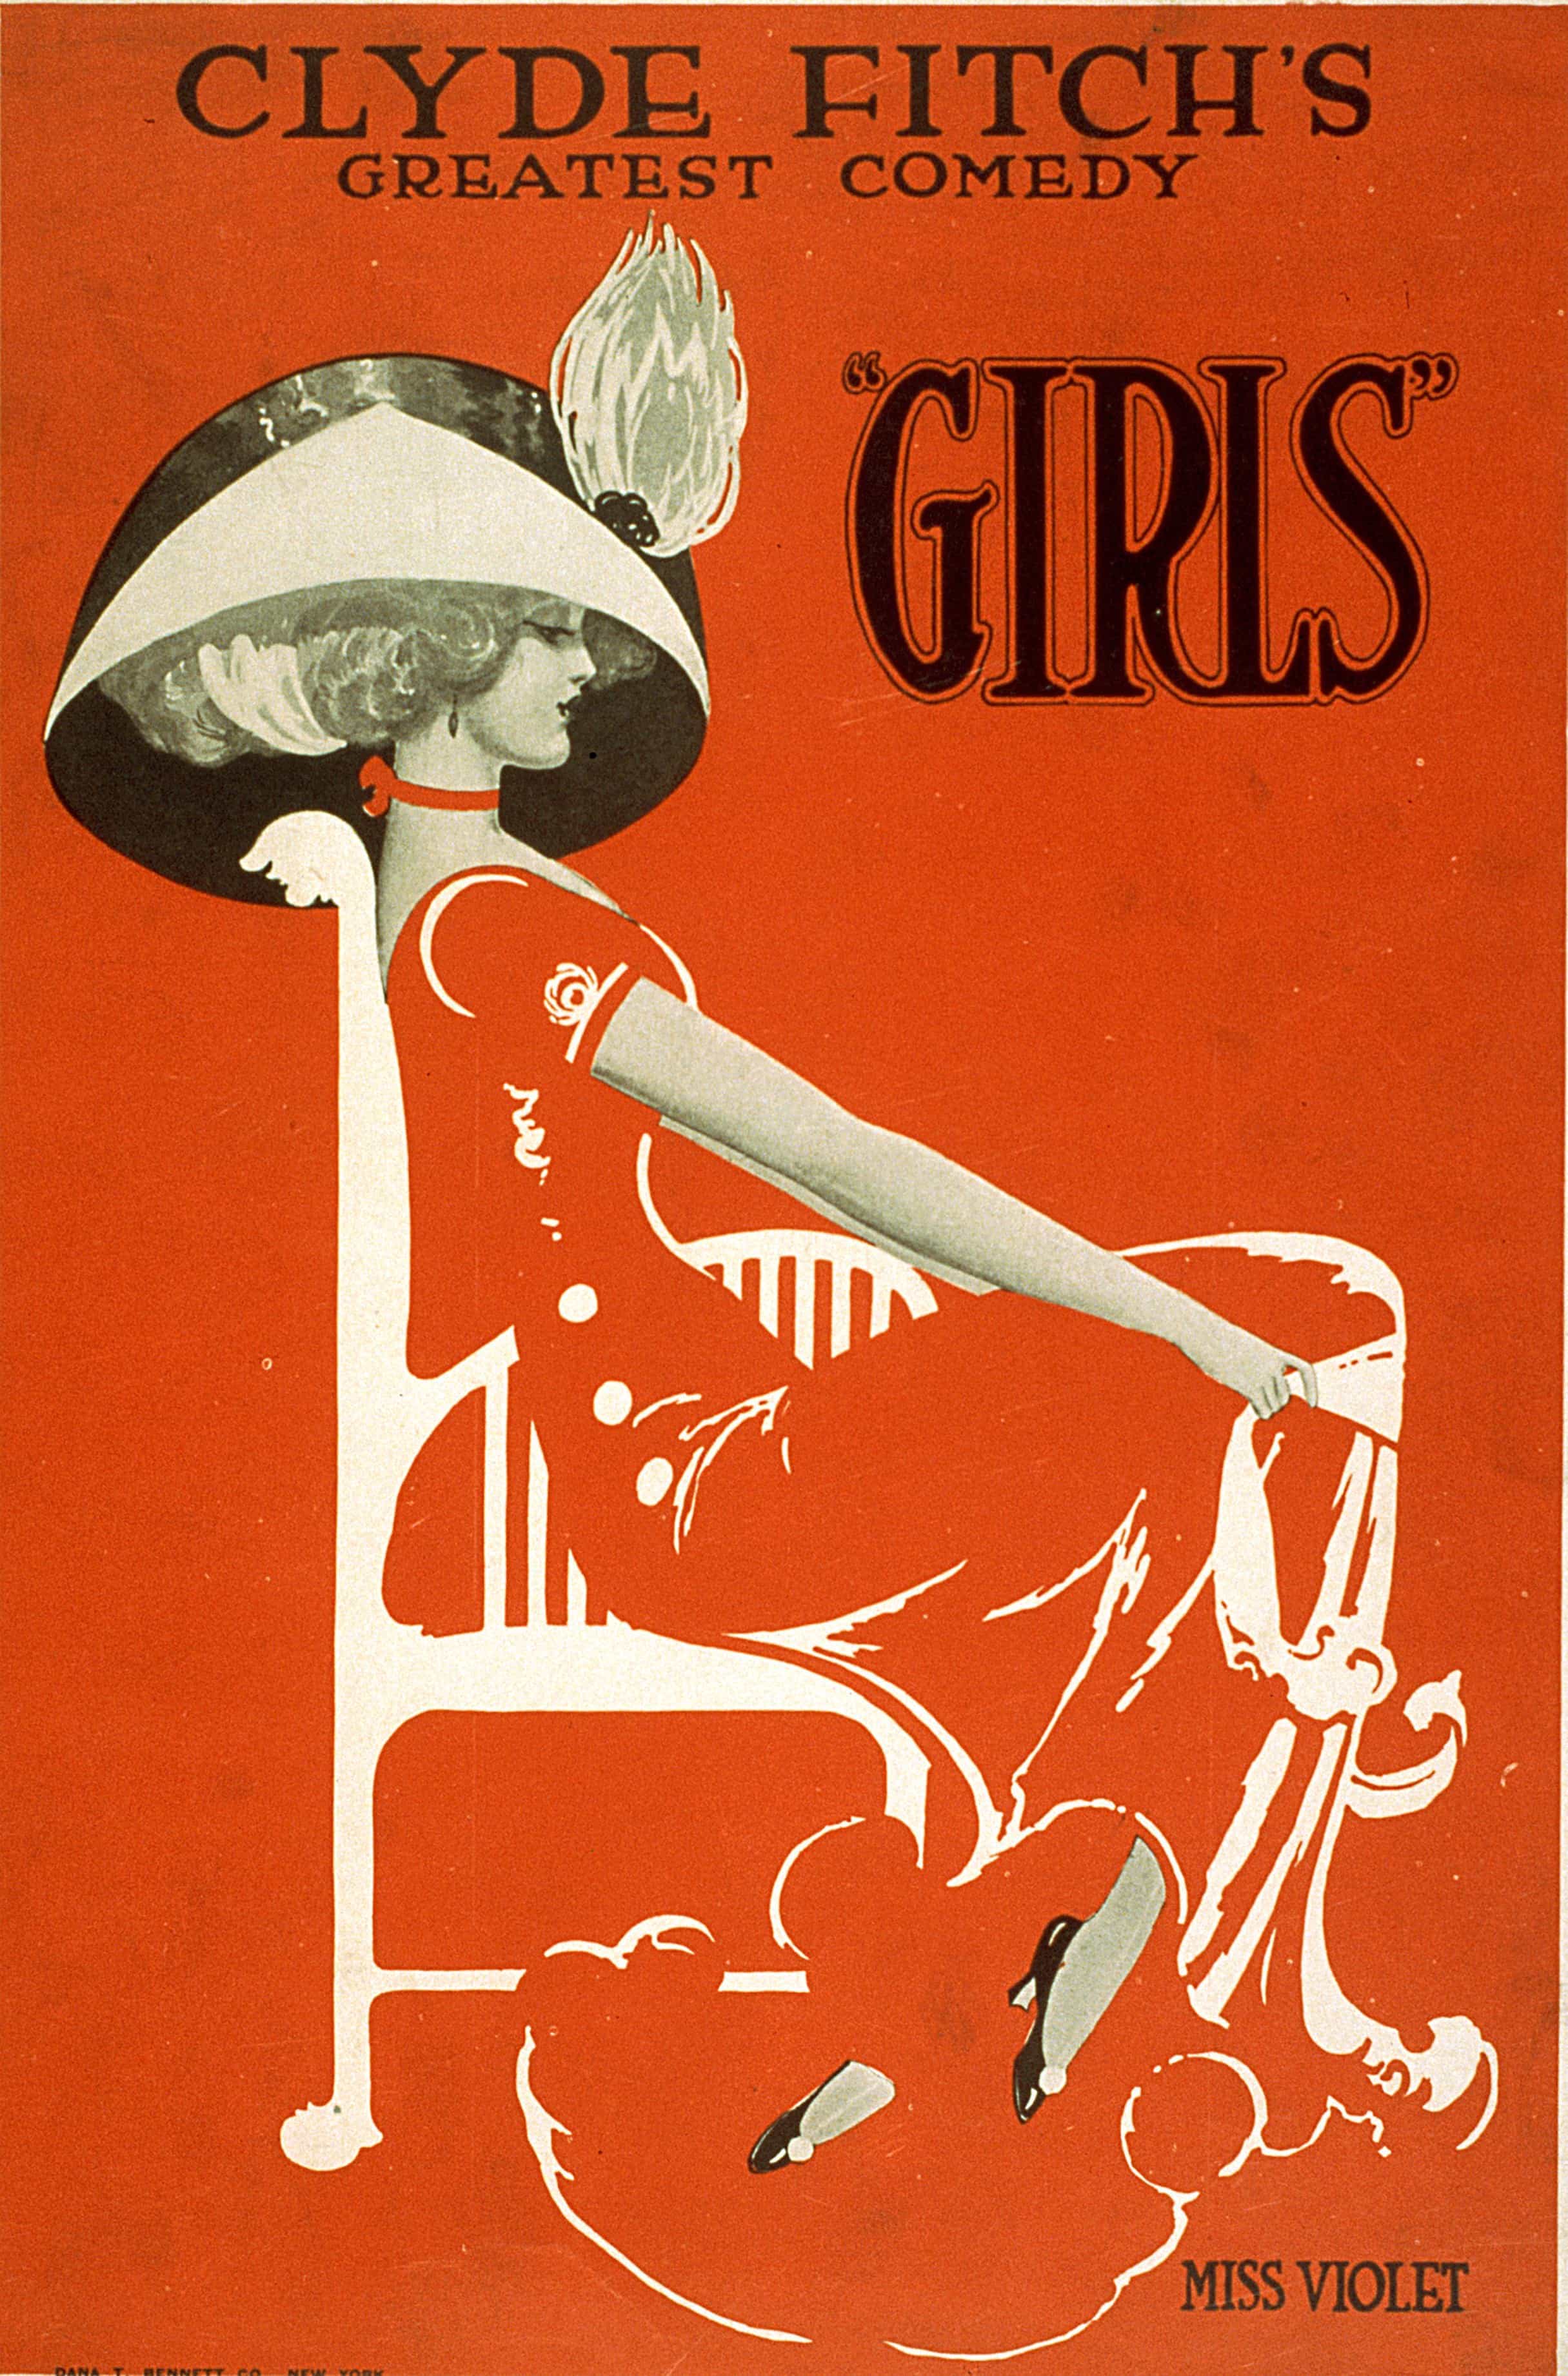 Vintage Theater Posters Retrographik